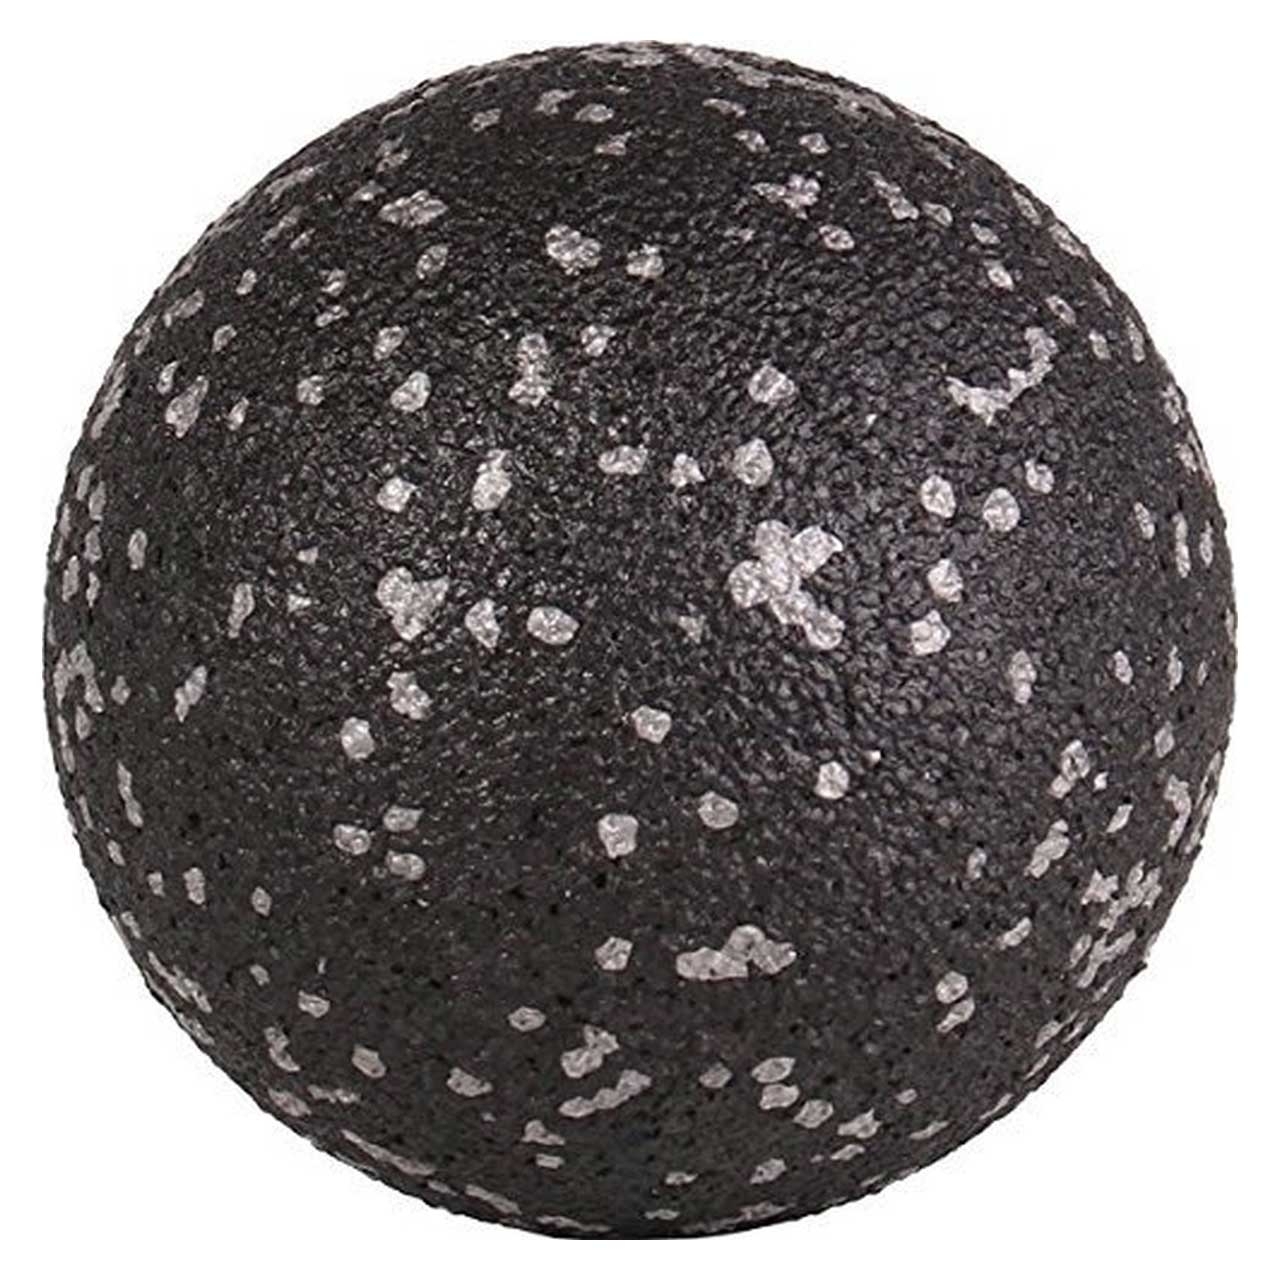 BLACKROLL® Ball 8 cm